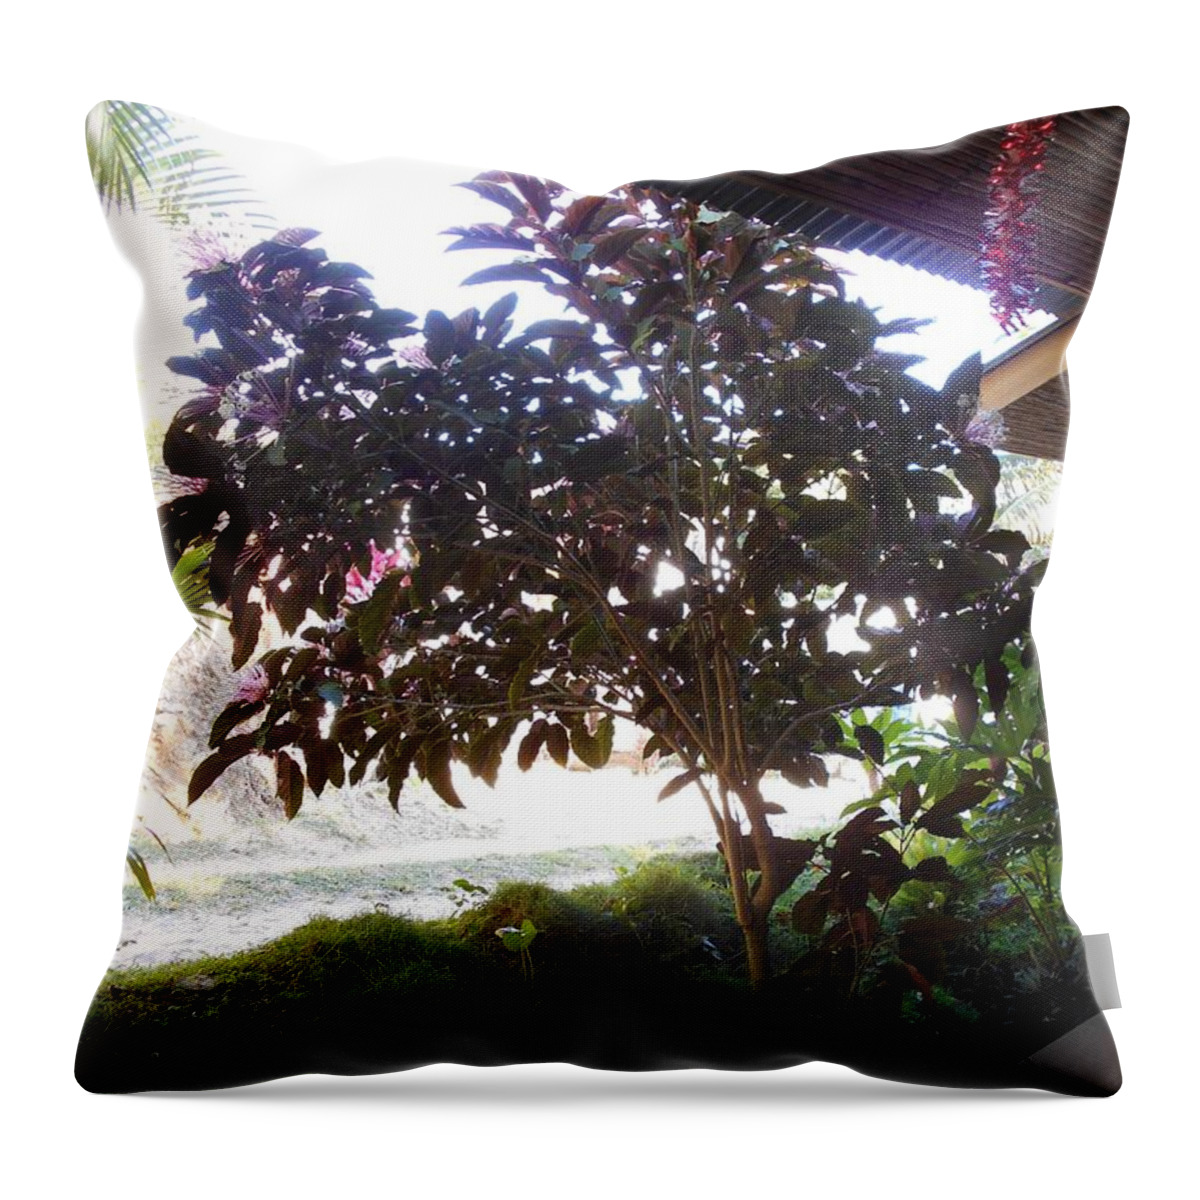 Roatan Throw Pillow featuring the photograph Roatan tree by Nancy Graham